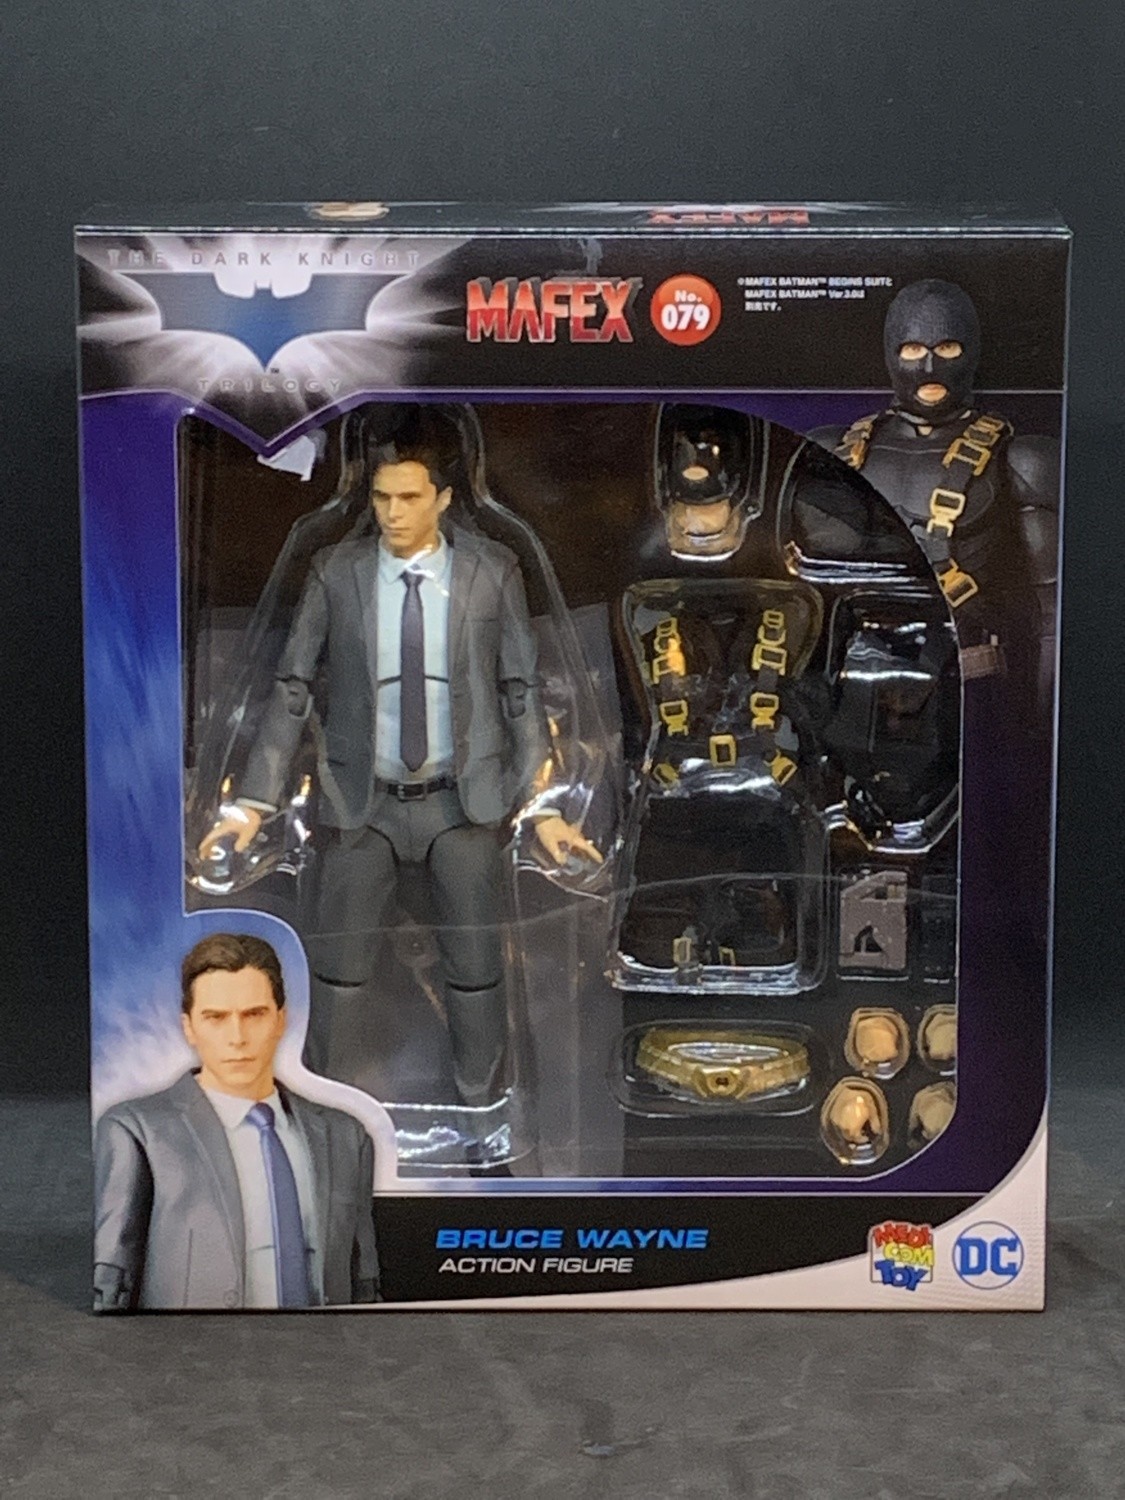 Medicom MAFEX Bruce Wayne - The Dark Knight Trilogy Ver. No. 079